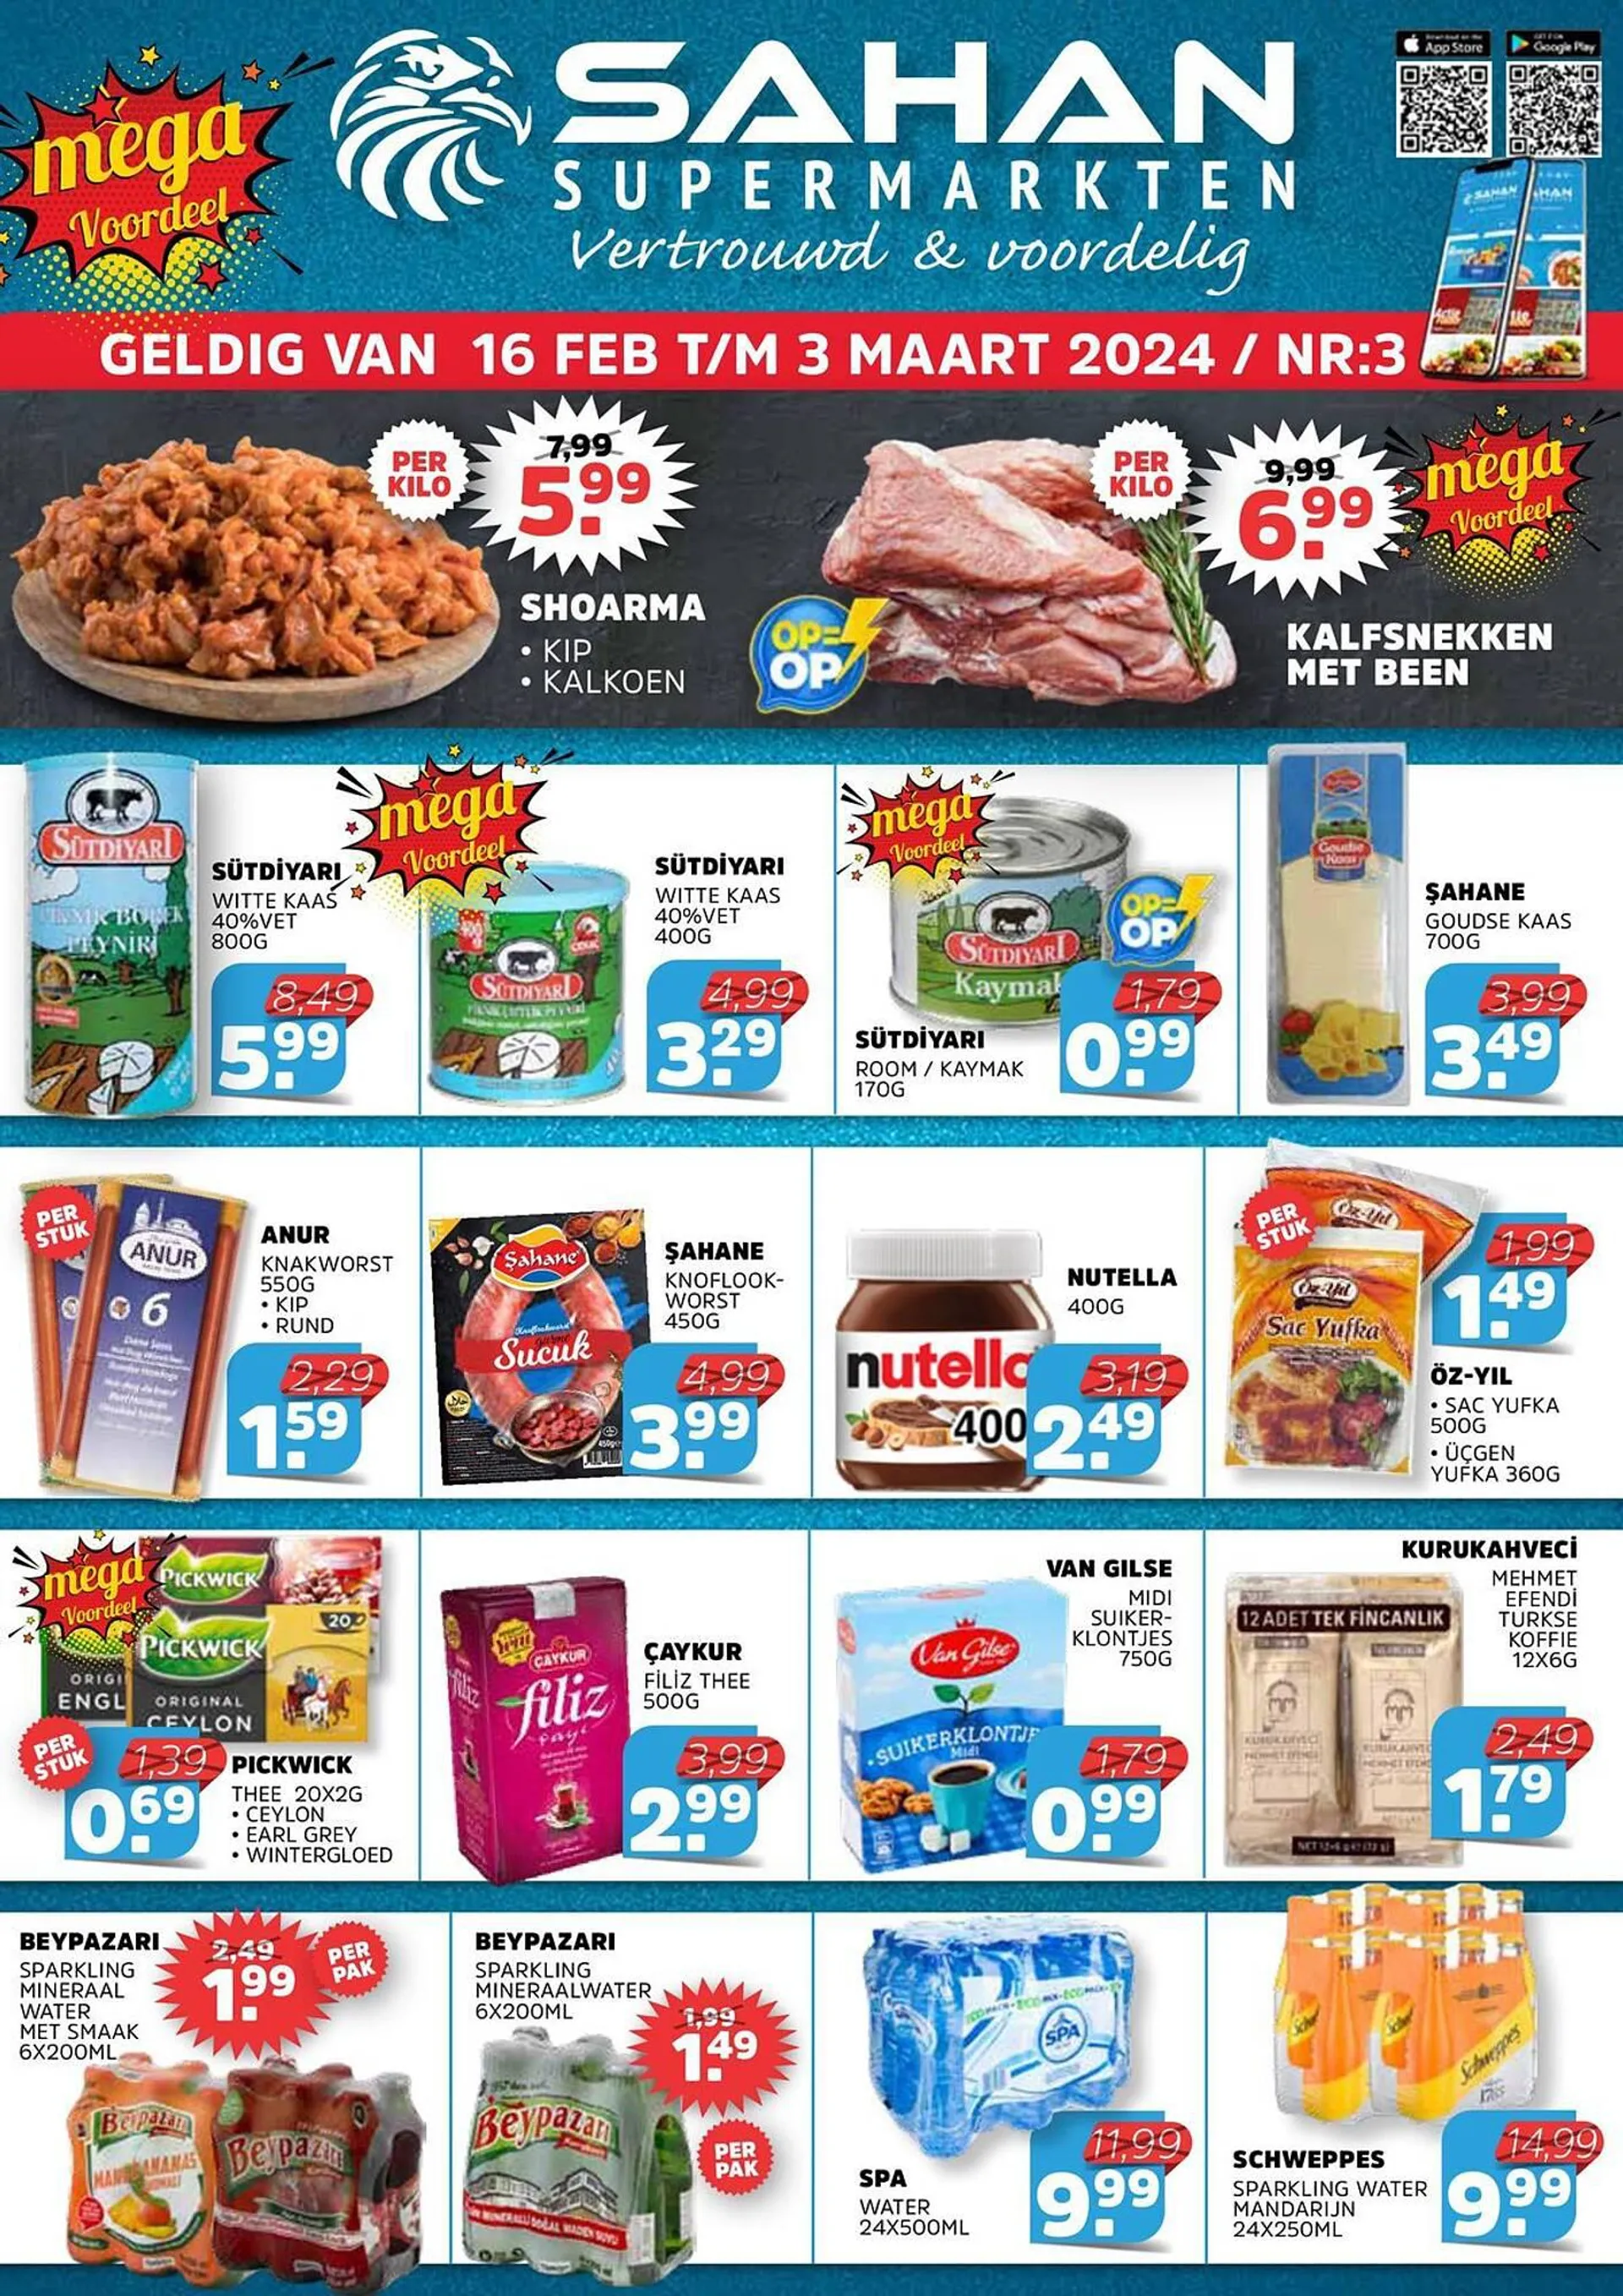 Sahan Supermarkten folder van 19 februari tot 3 maart 2024 - Folder pagina 